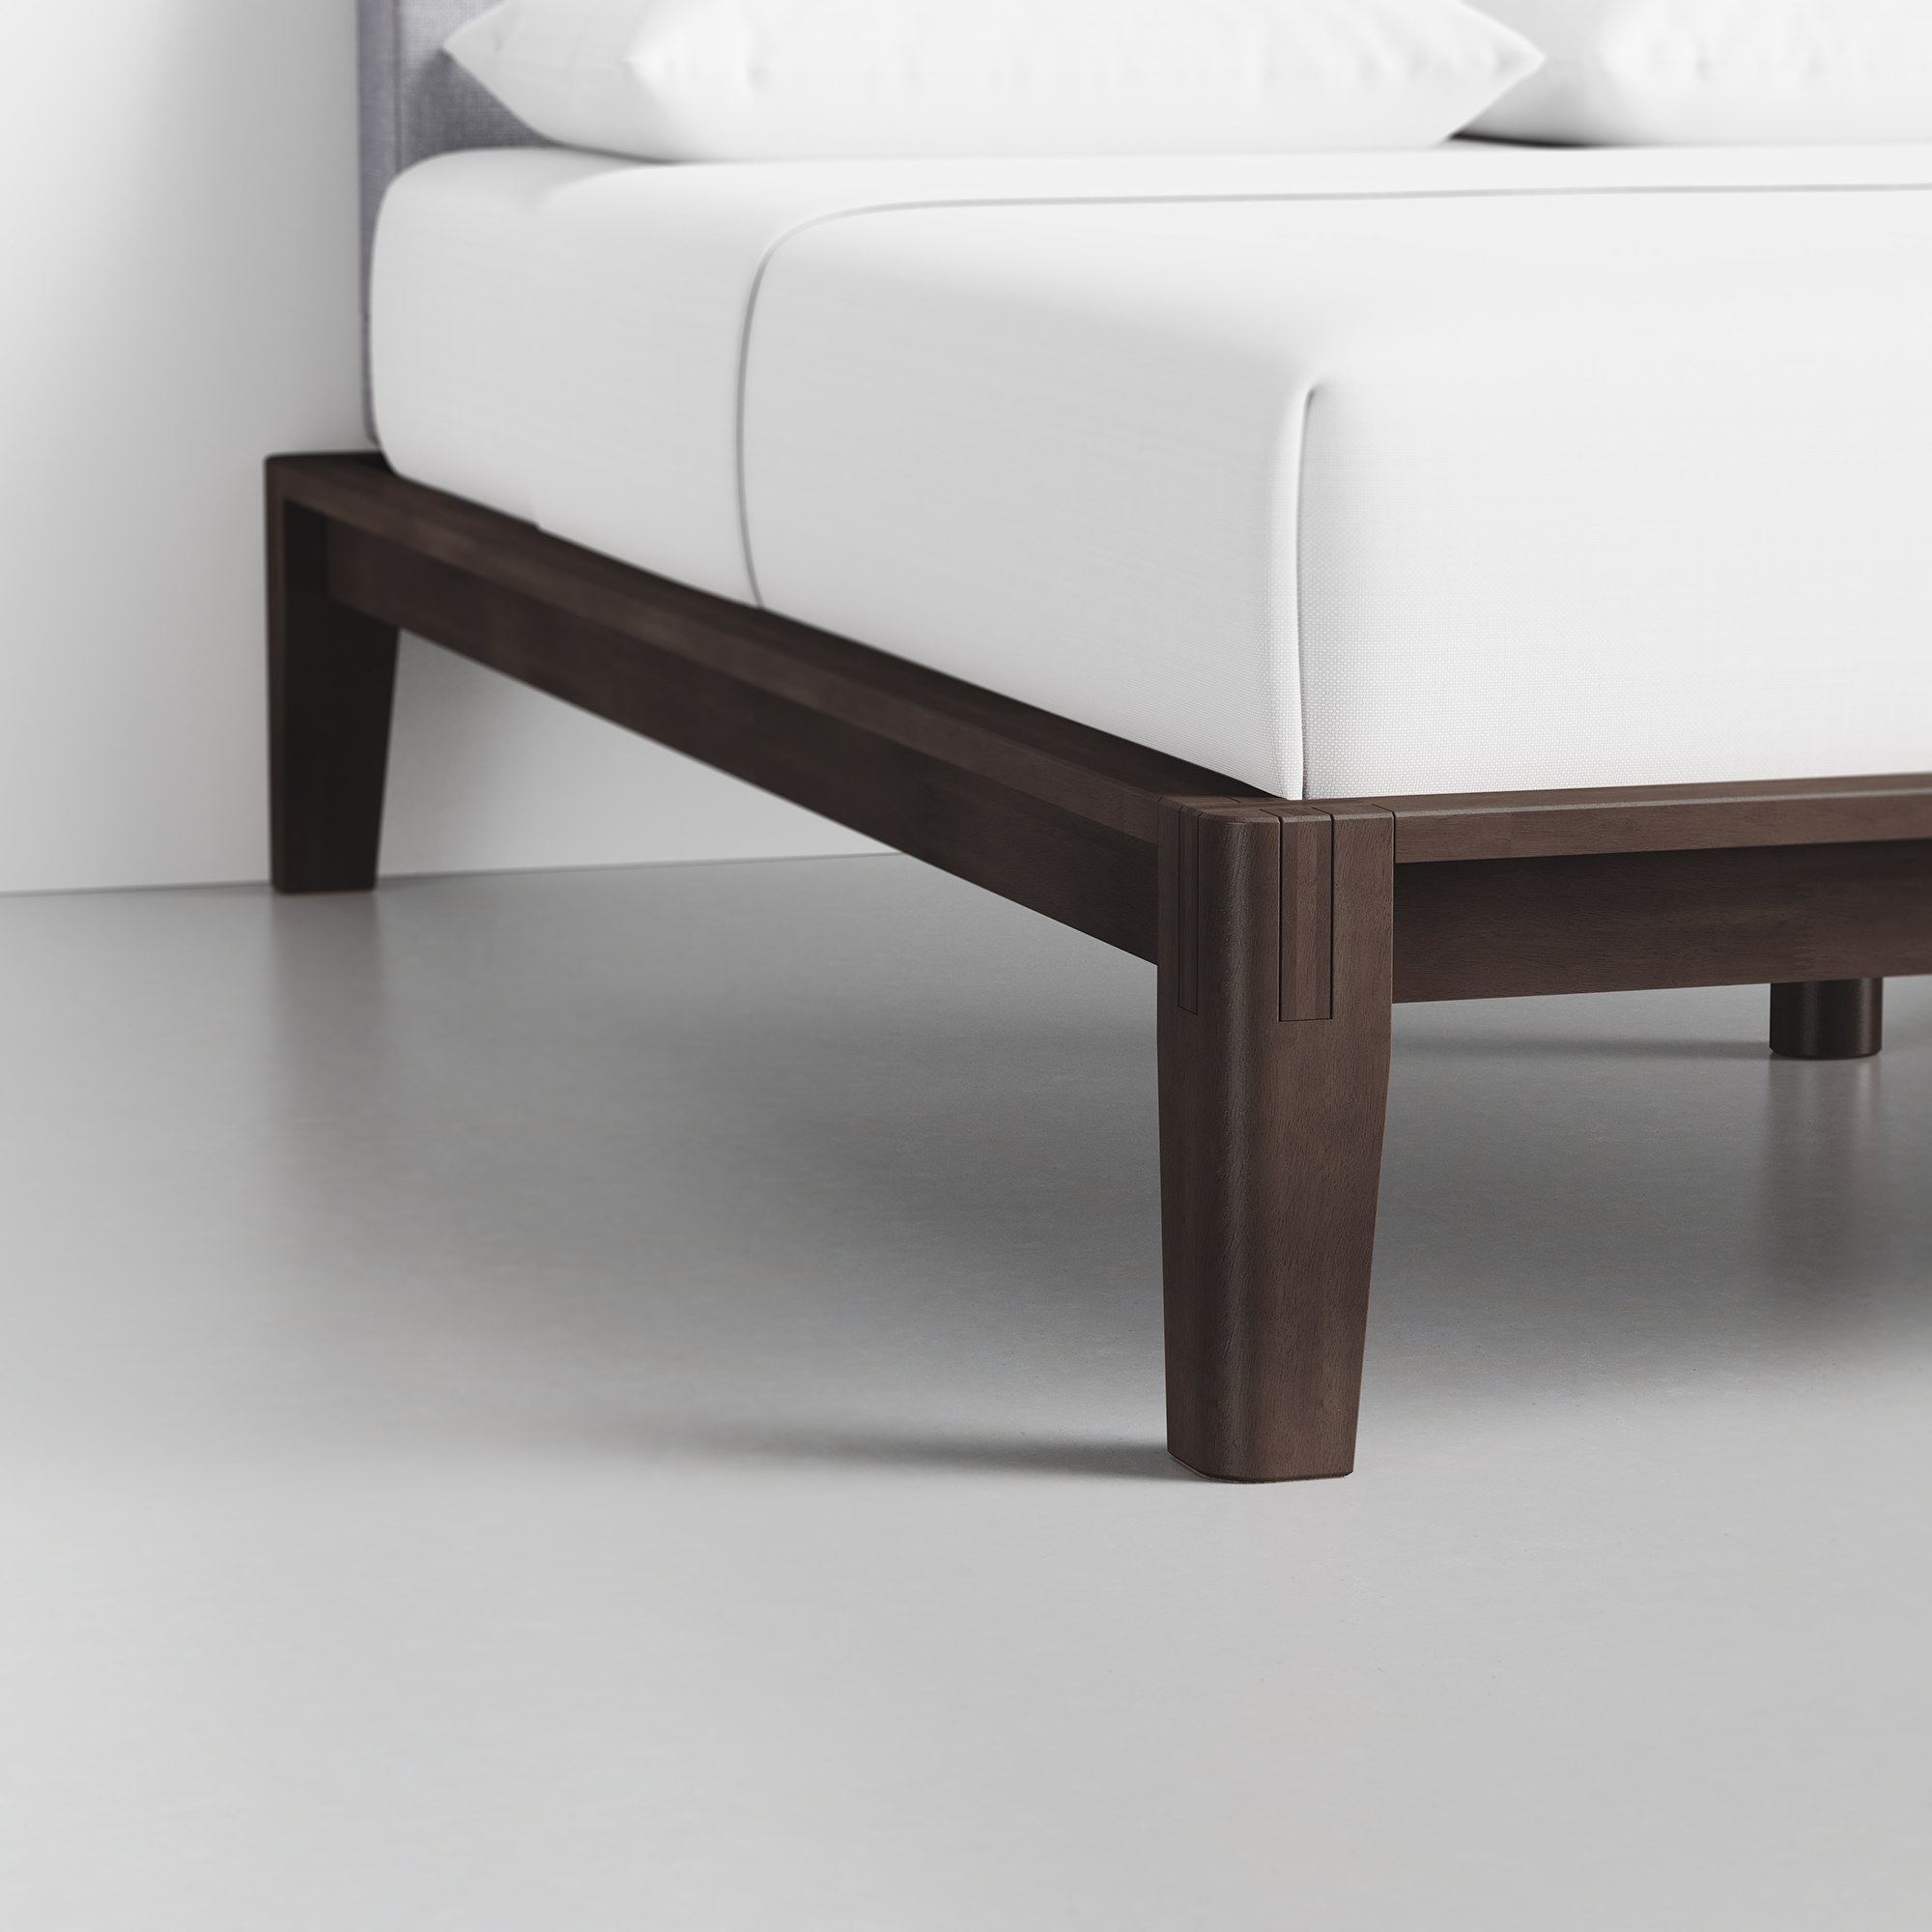 The Bed (Espresso / Fog Grey) - Render - Foot Detail